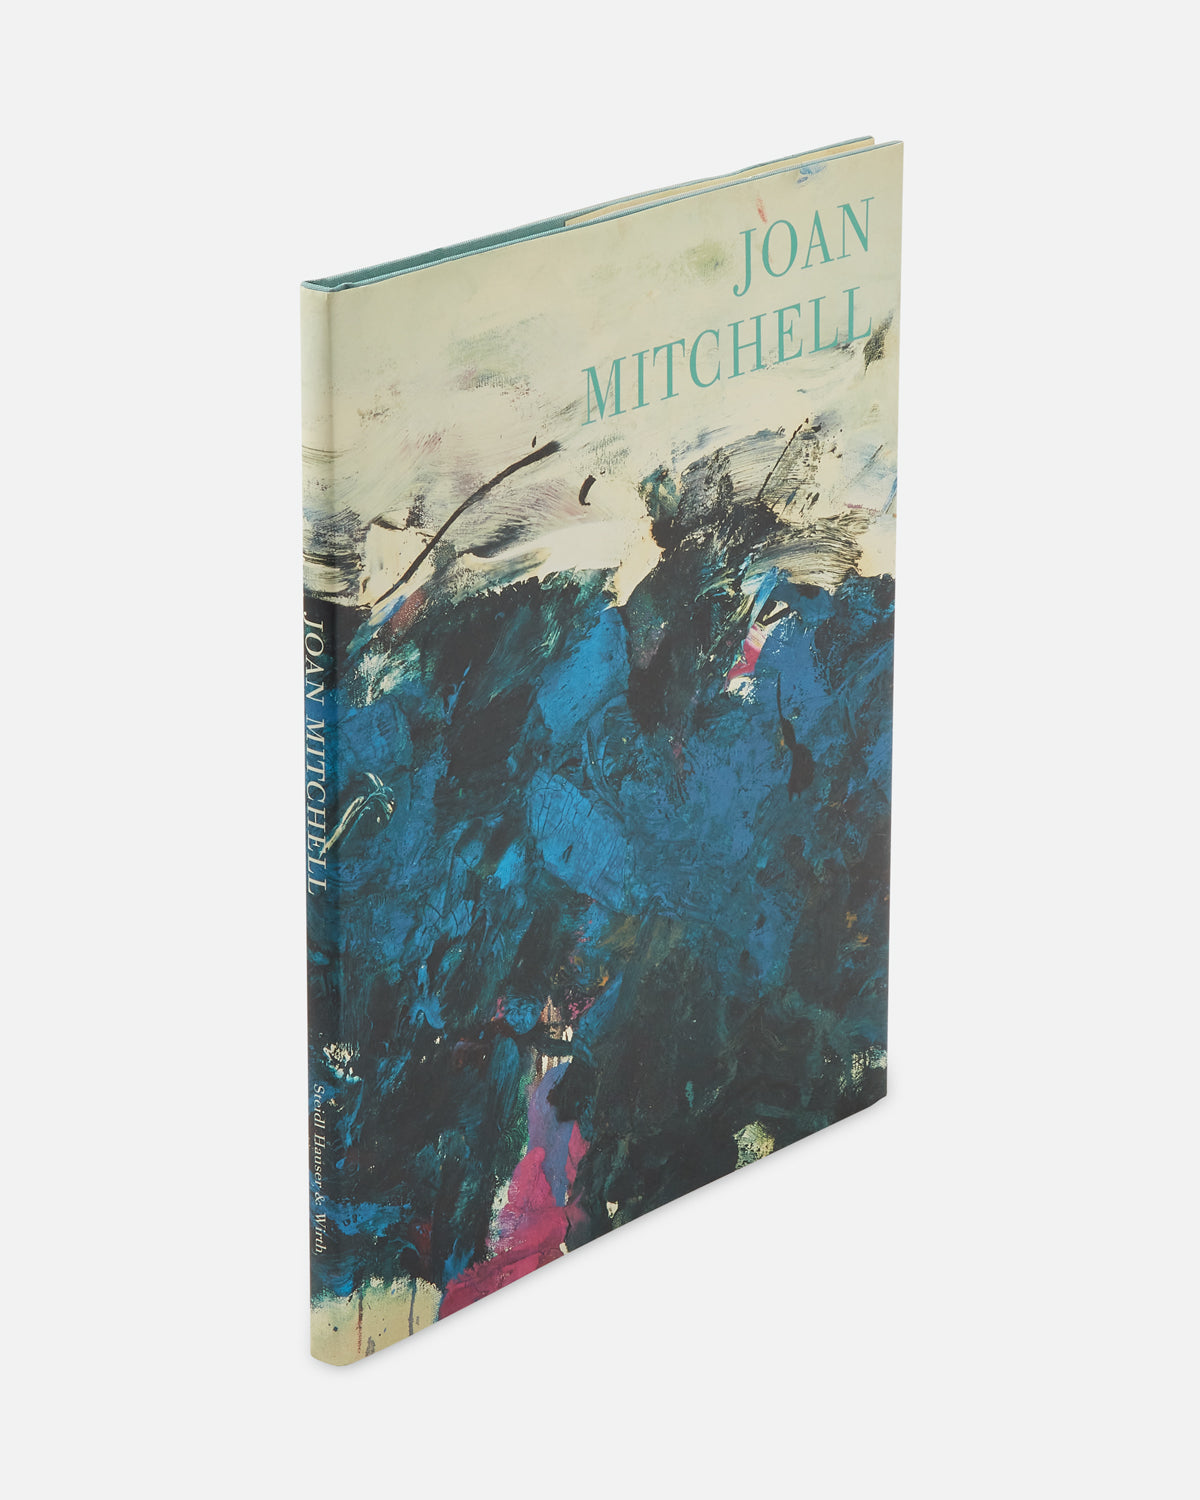 Joan Mitchell: Leaving America. New York to Paris 1958 - 1964